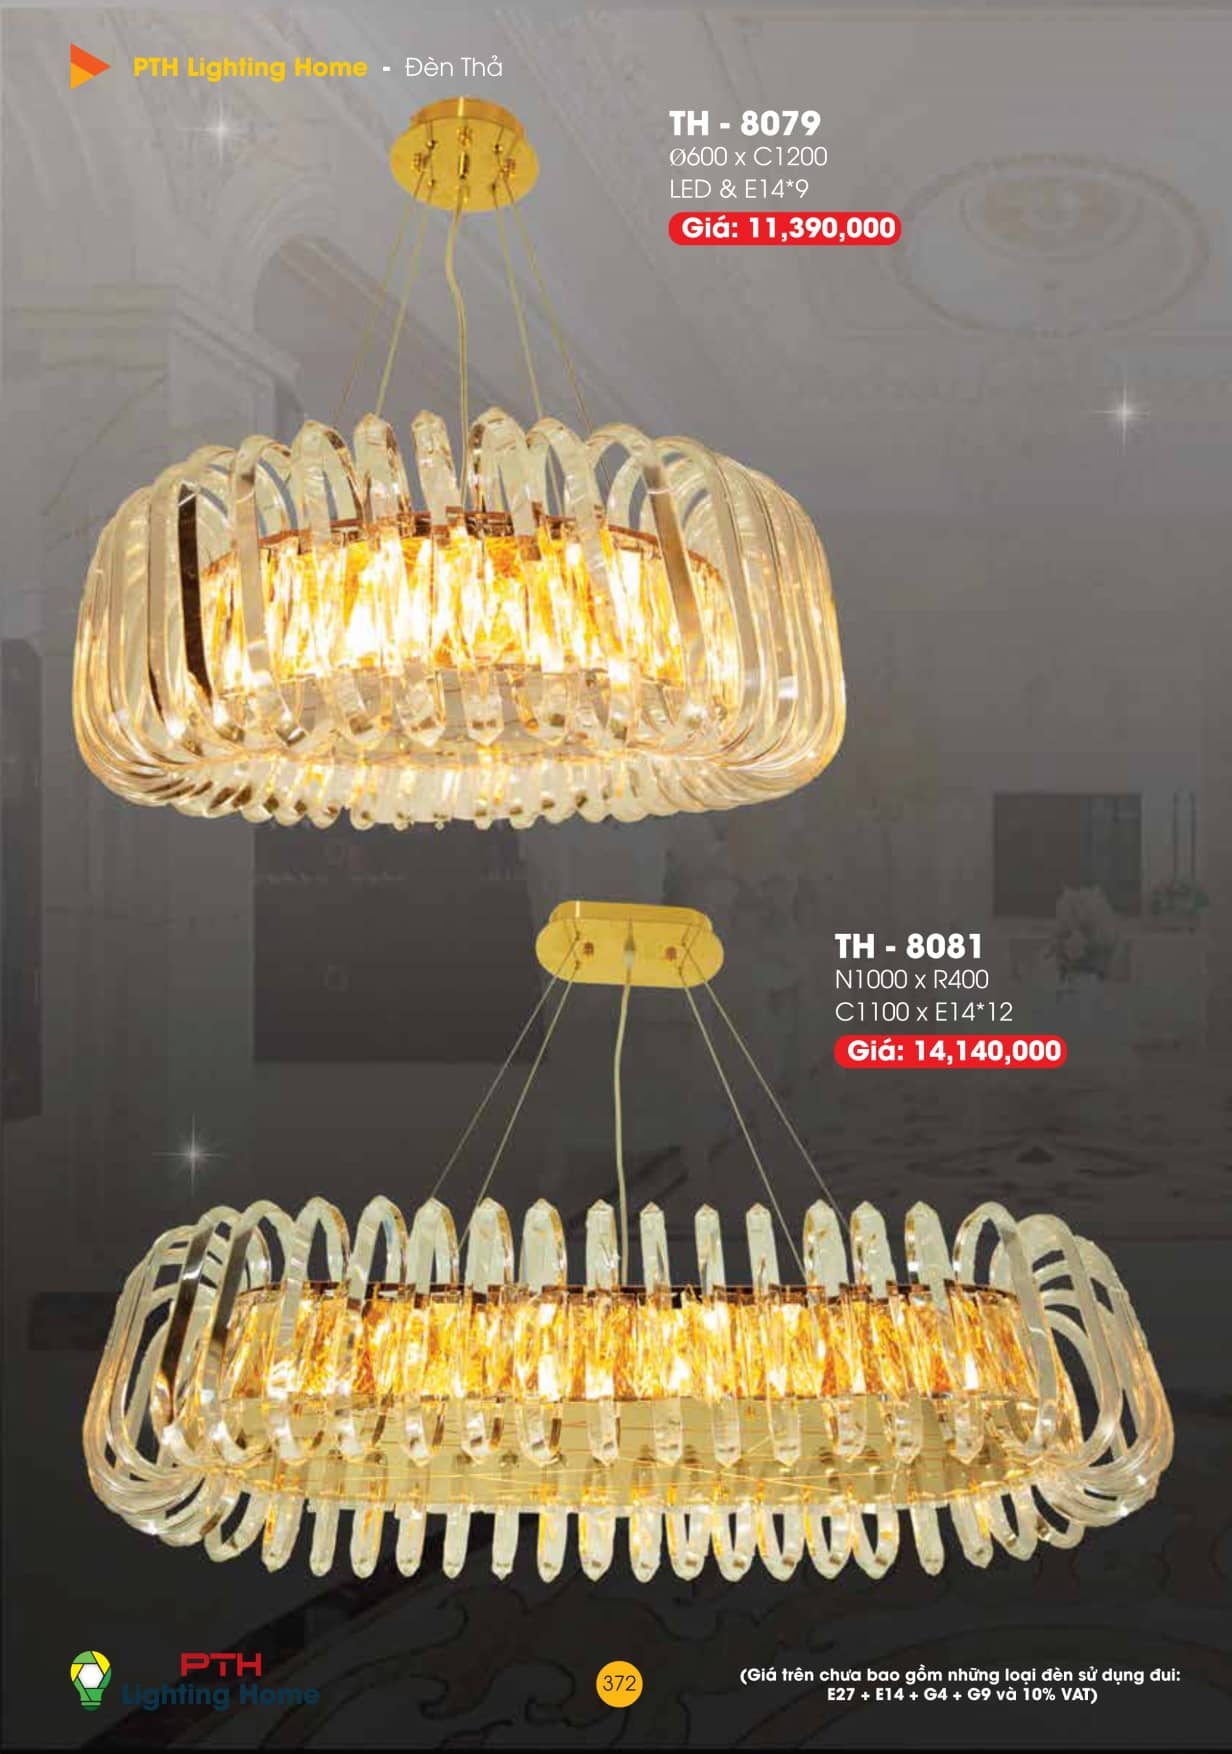 catalogue-bang-gia-den-led-trang-tri-pth-lighting-home-374